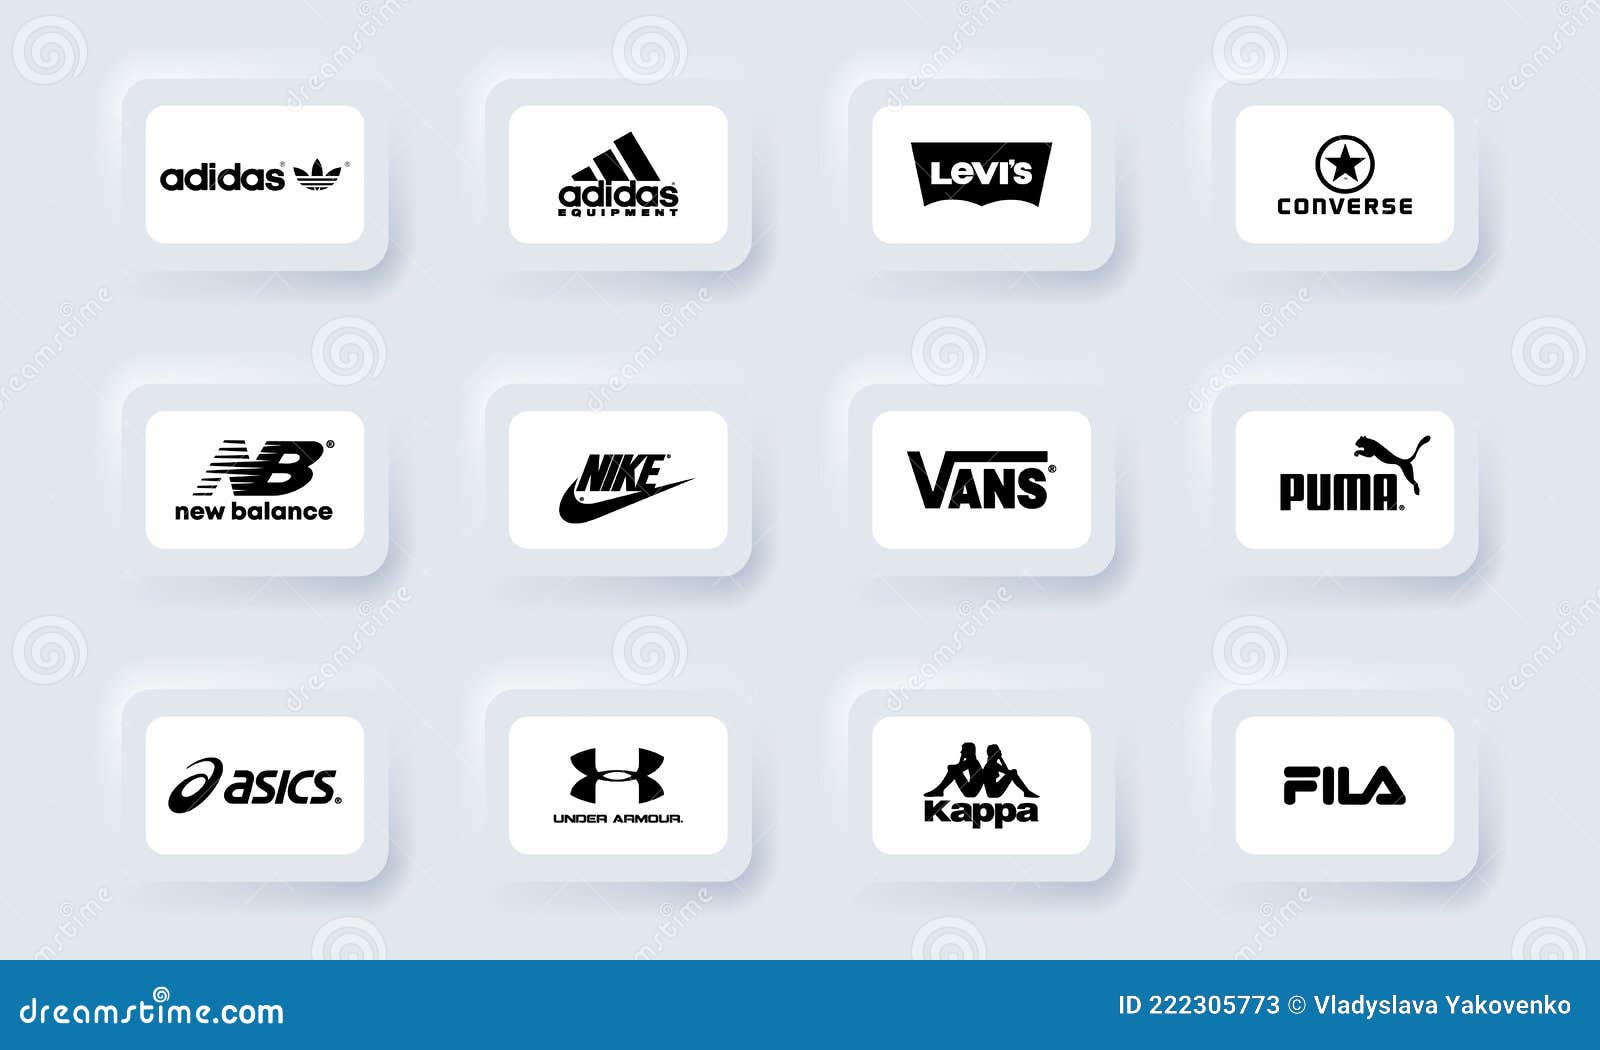 Adidas, New Under Armour, Asics, NIKE, Vans, Converse, Puma, Levis, Fila. Sportwear Brands. Logos of Sportswear Editorial Stock - Image of expensive, footwear: 222305773